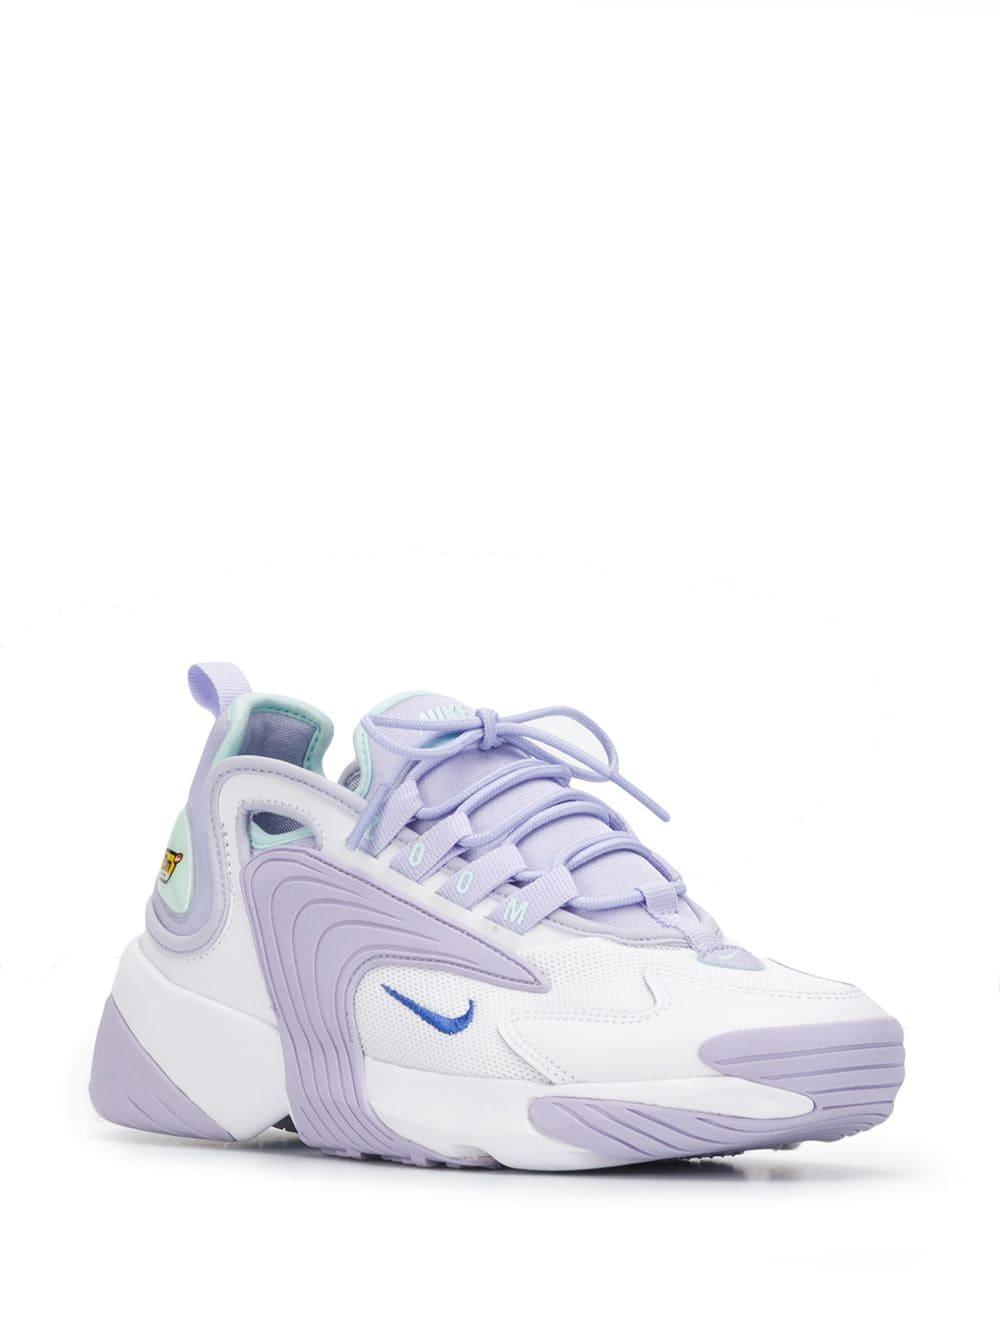 Nike Leather Lilac Zoom 2k Sneakers in Purple - Lyst